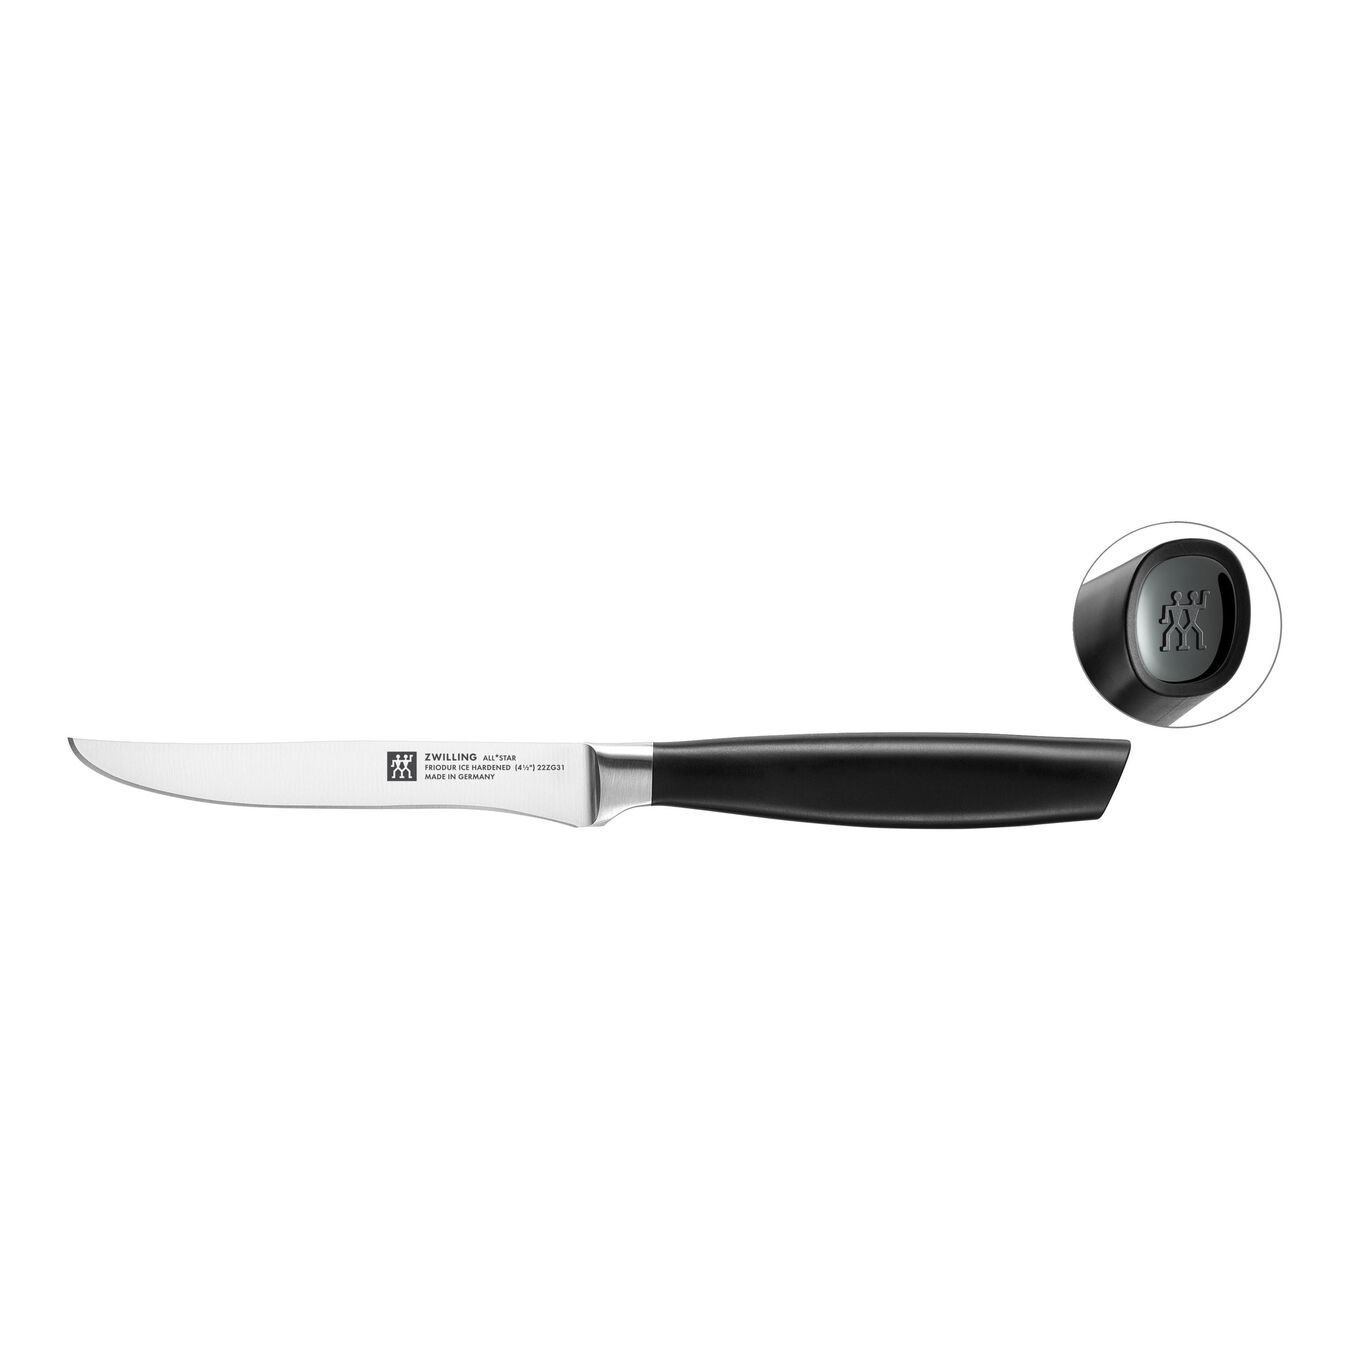 Grill kniv 12 cm, Svart,,large 1